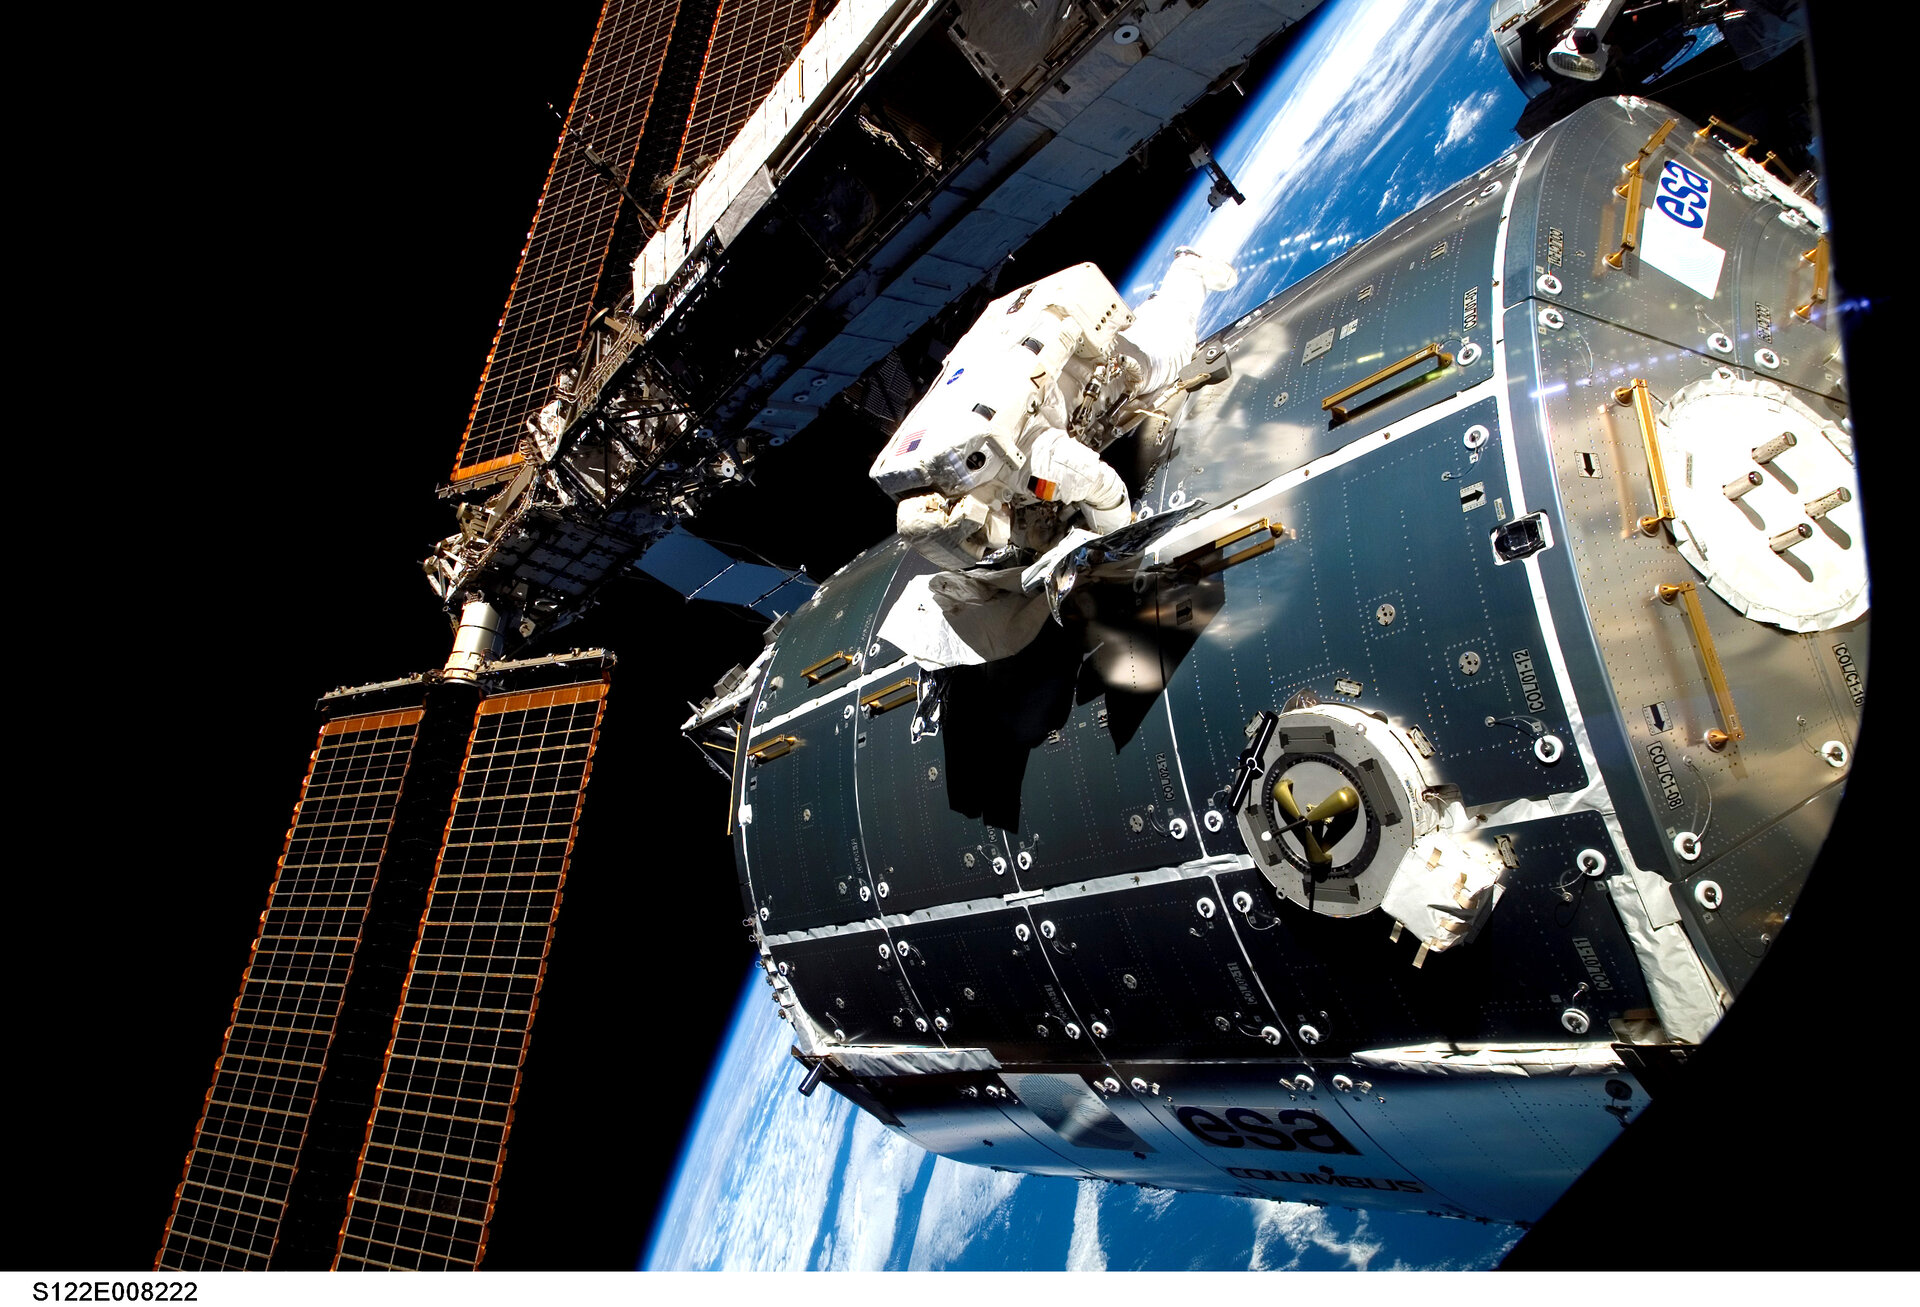 Hans Schlegel works on installing ESA's Columbus module on the ISS